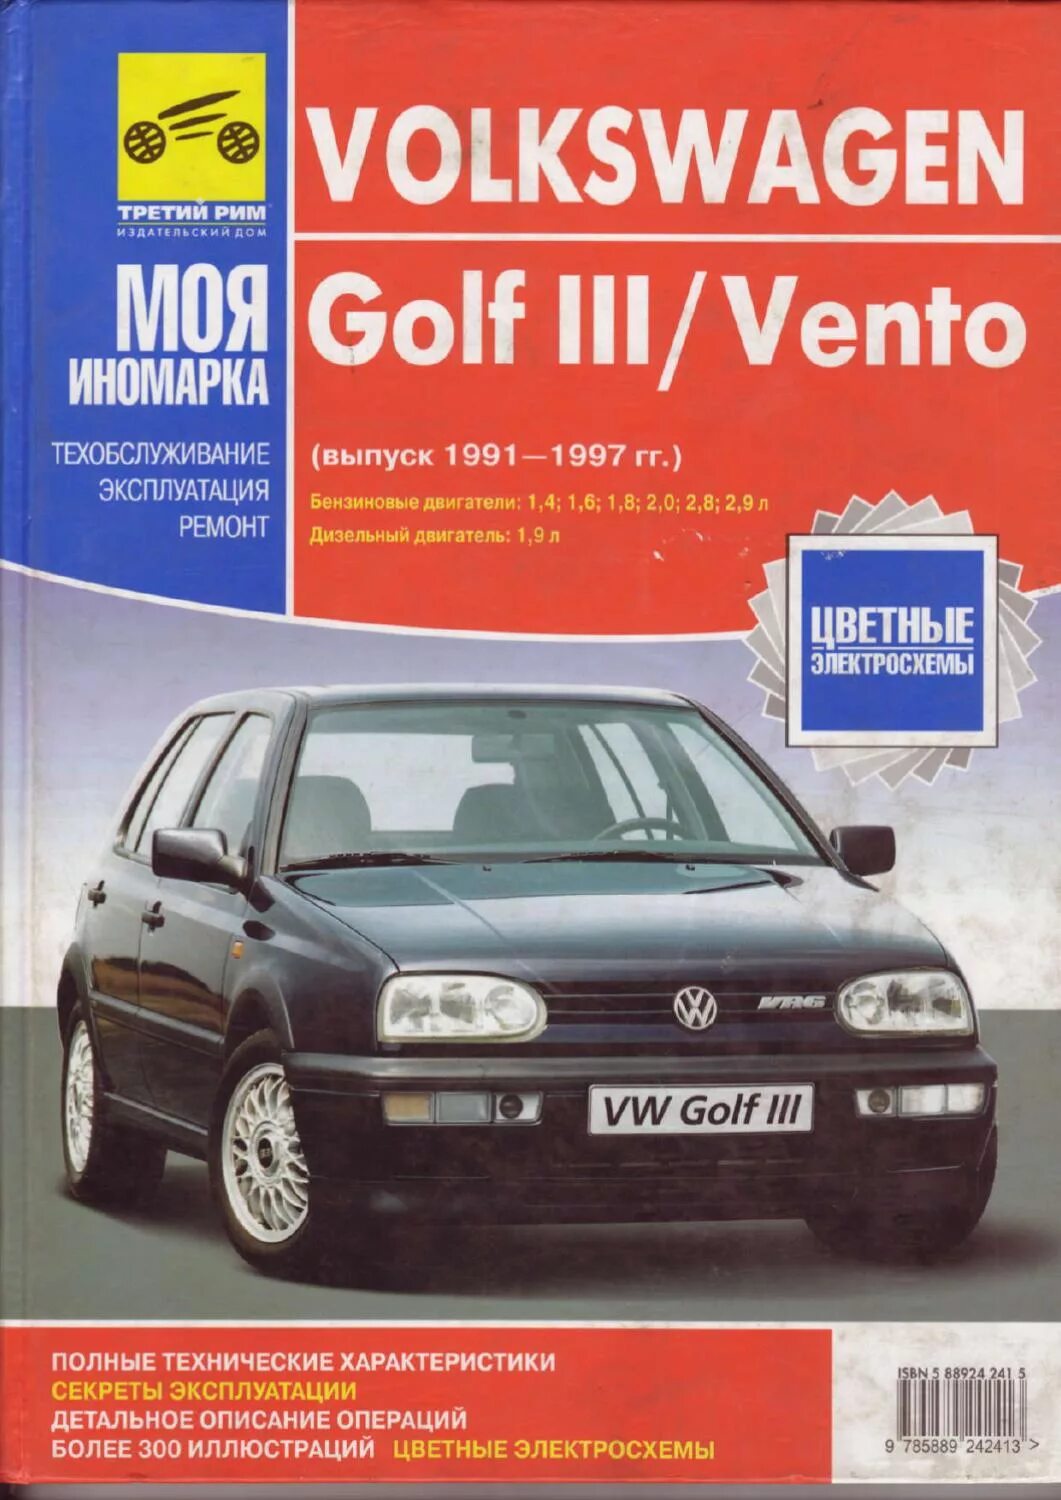 Volkswagen книги. Фольксваген гольф 3 1991. Volkswagen Golf III, Фольксваген гольф 3 (1991-2000). Фольксваген гольф 4 книга по ремонту. Книга по ремонту Фольксваген гольф 3.